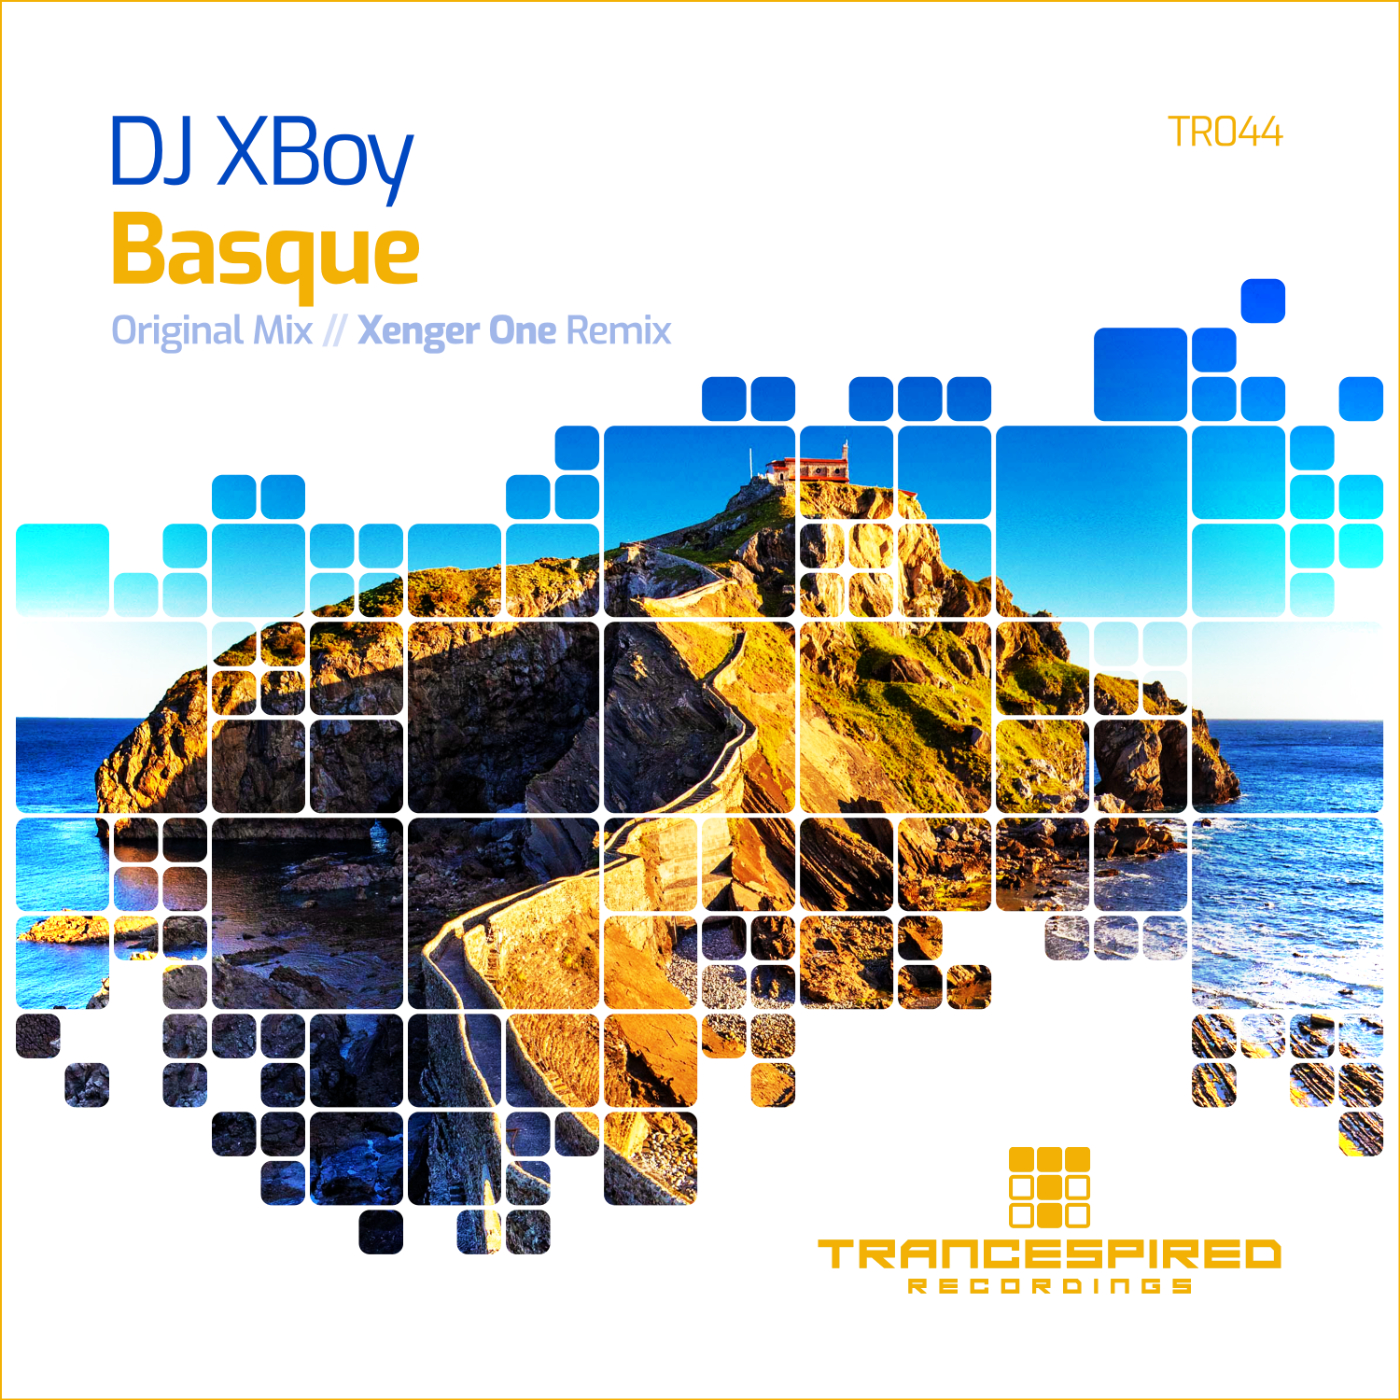 DJ XBoy presents Basque on Trancespired Recordings